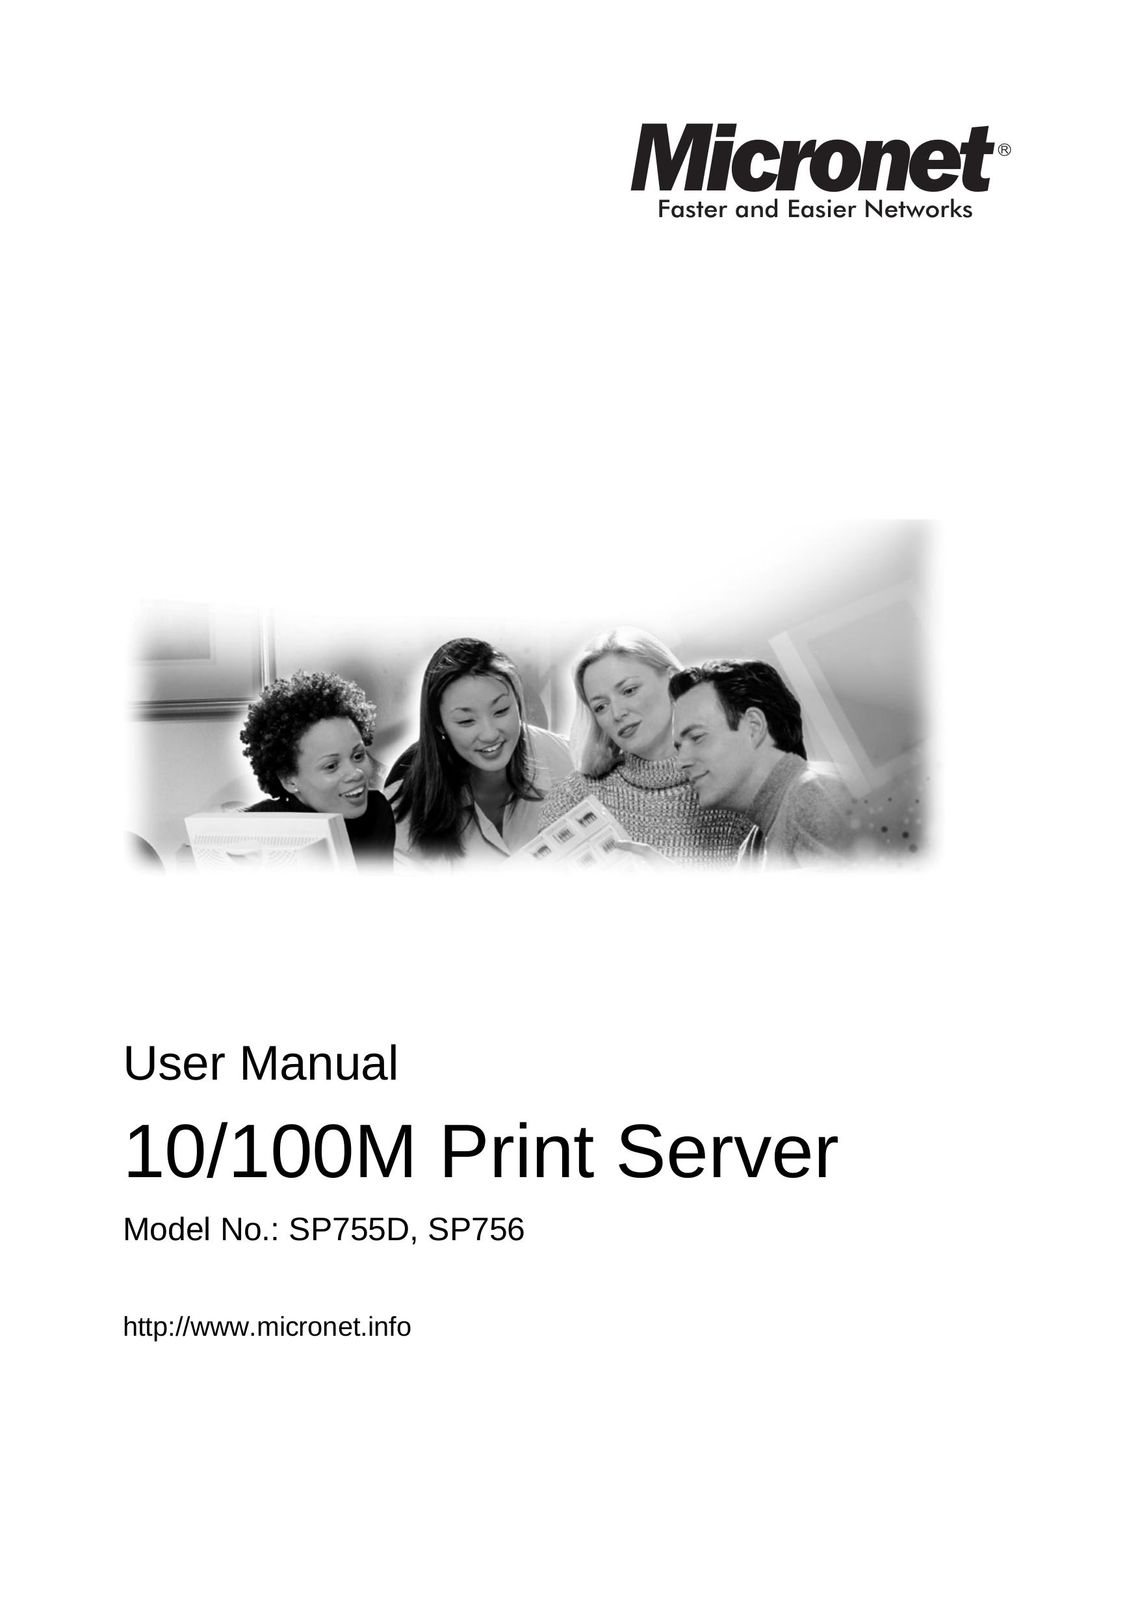 MicroNet Technology SP756 Printer User Manual